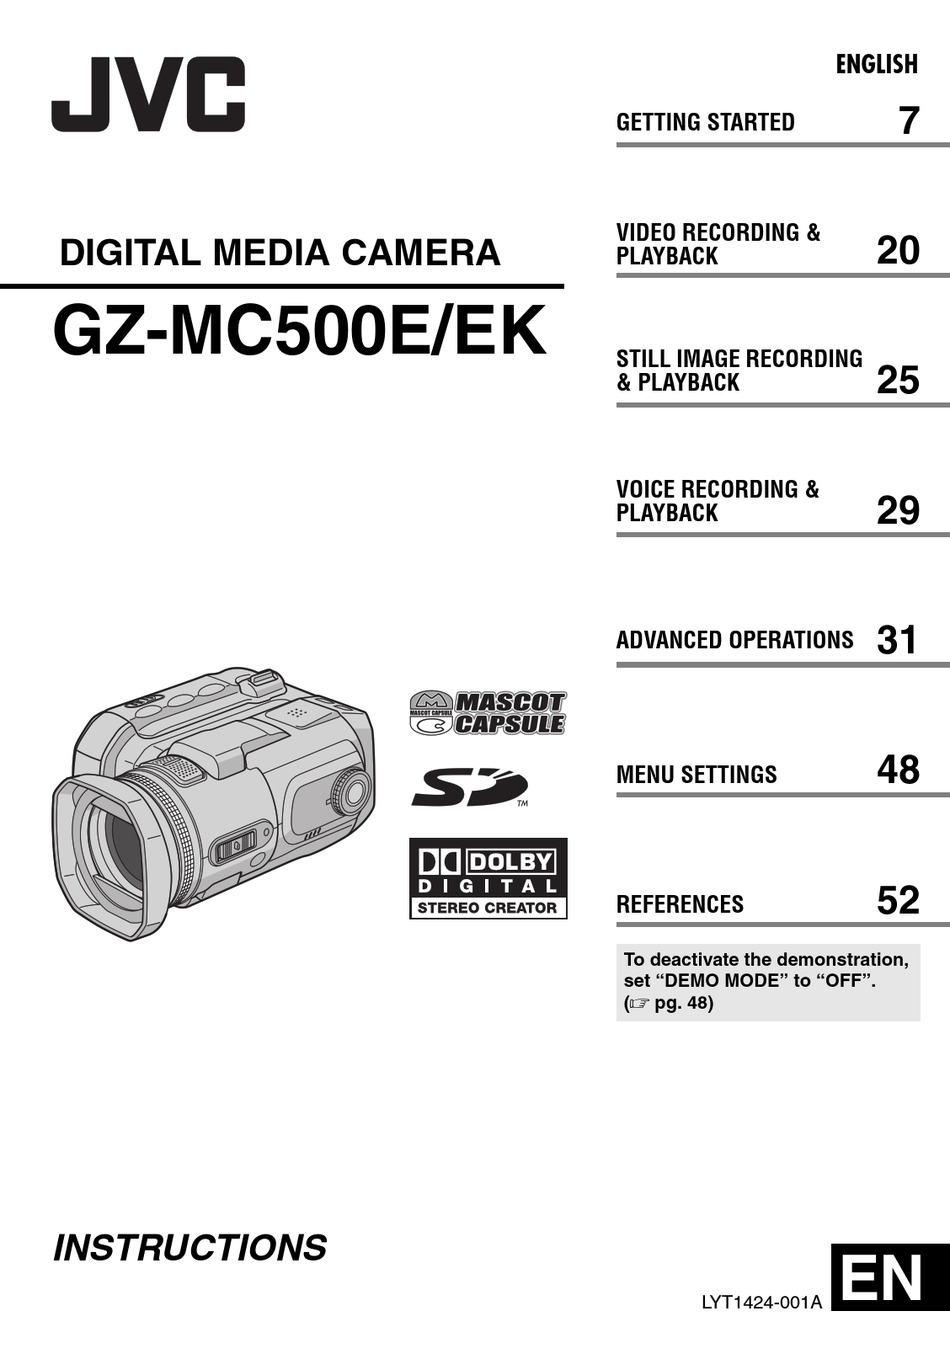 Jvc Digital Media Camera Gz Mc500e Ek Instructions Manual Pdf Download Manualslib